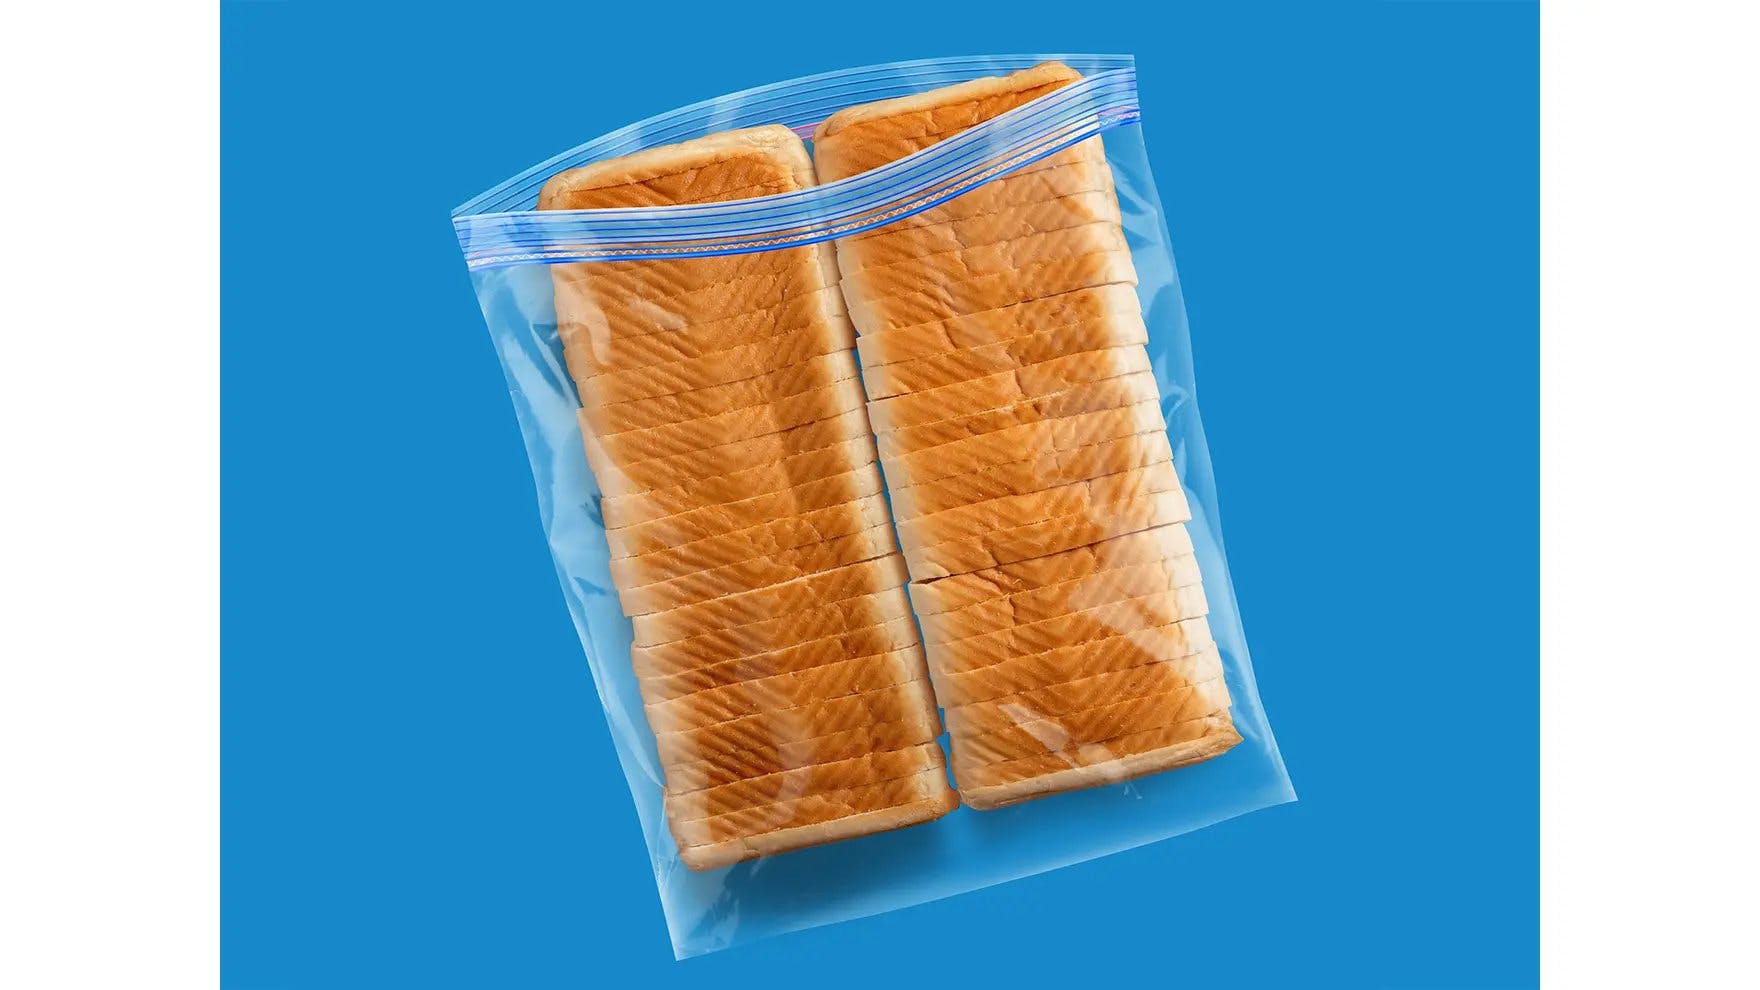 Three loaves of sandwich bread inside an Ziploc® brand extra large freezer bag